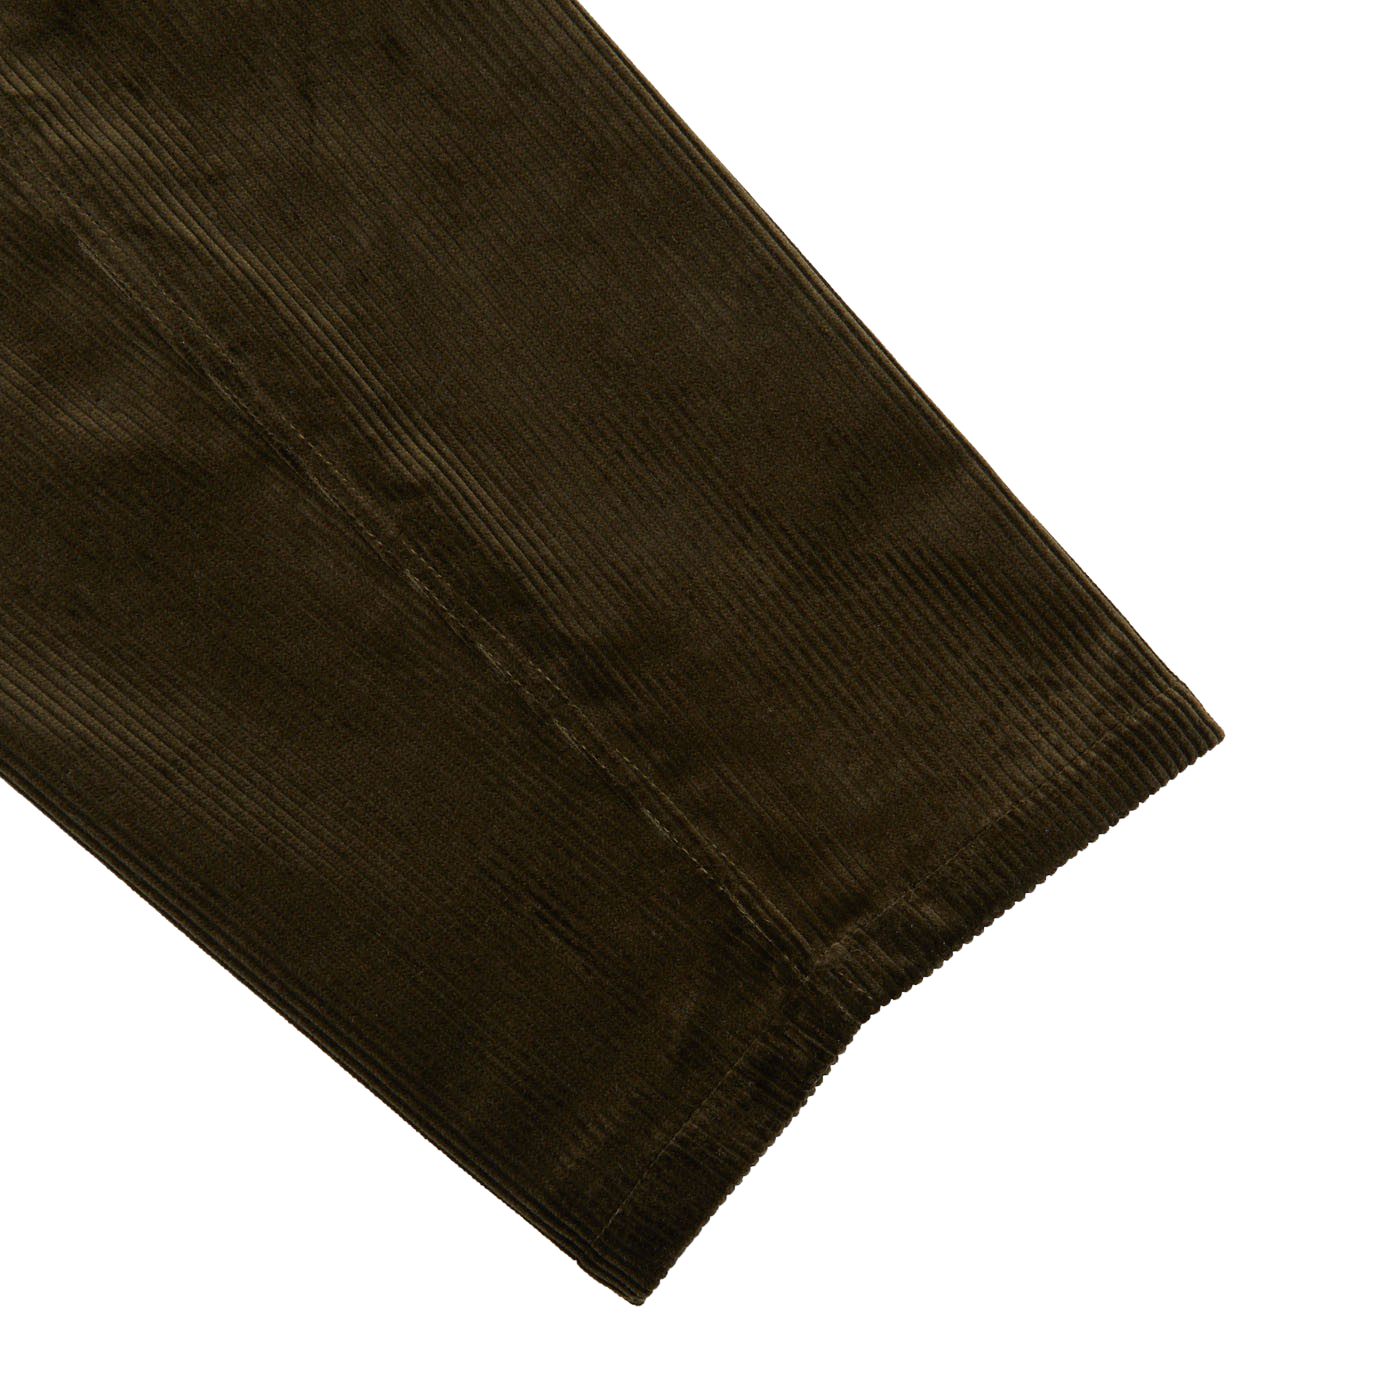 De Bonne Facture Dark Olive Cotton Corduroy Balloon Trousers, showcased against a white background.